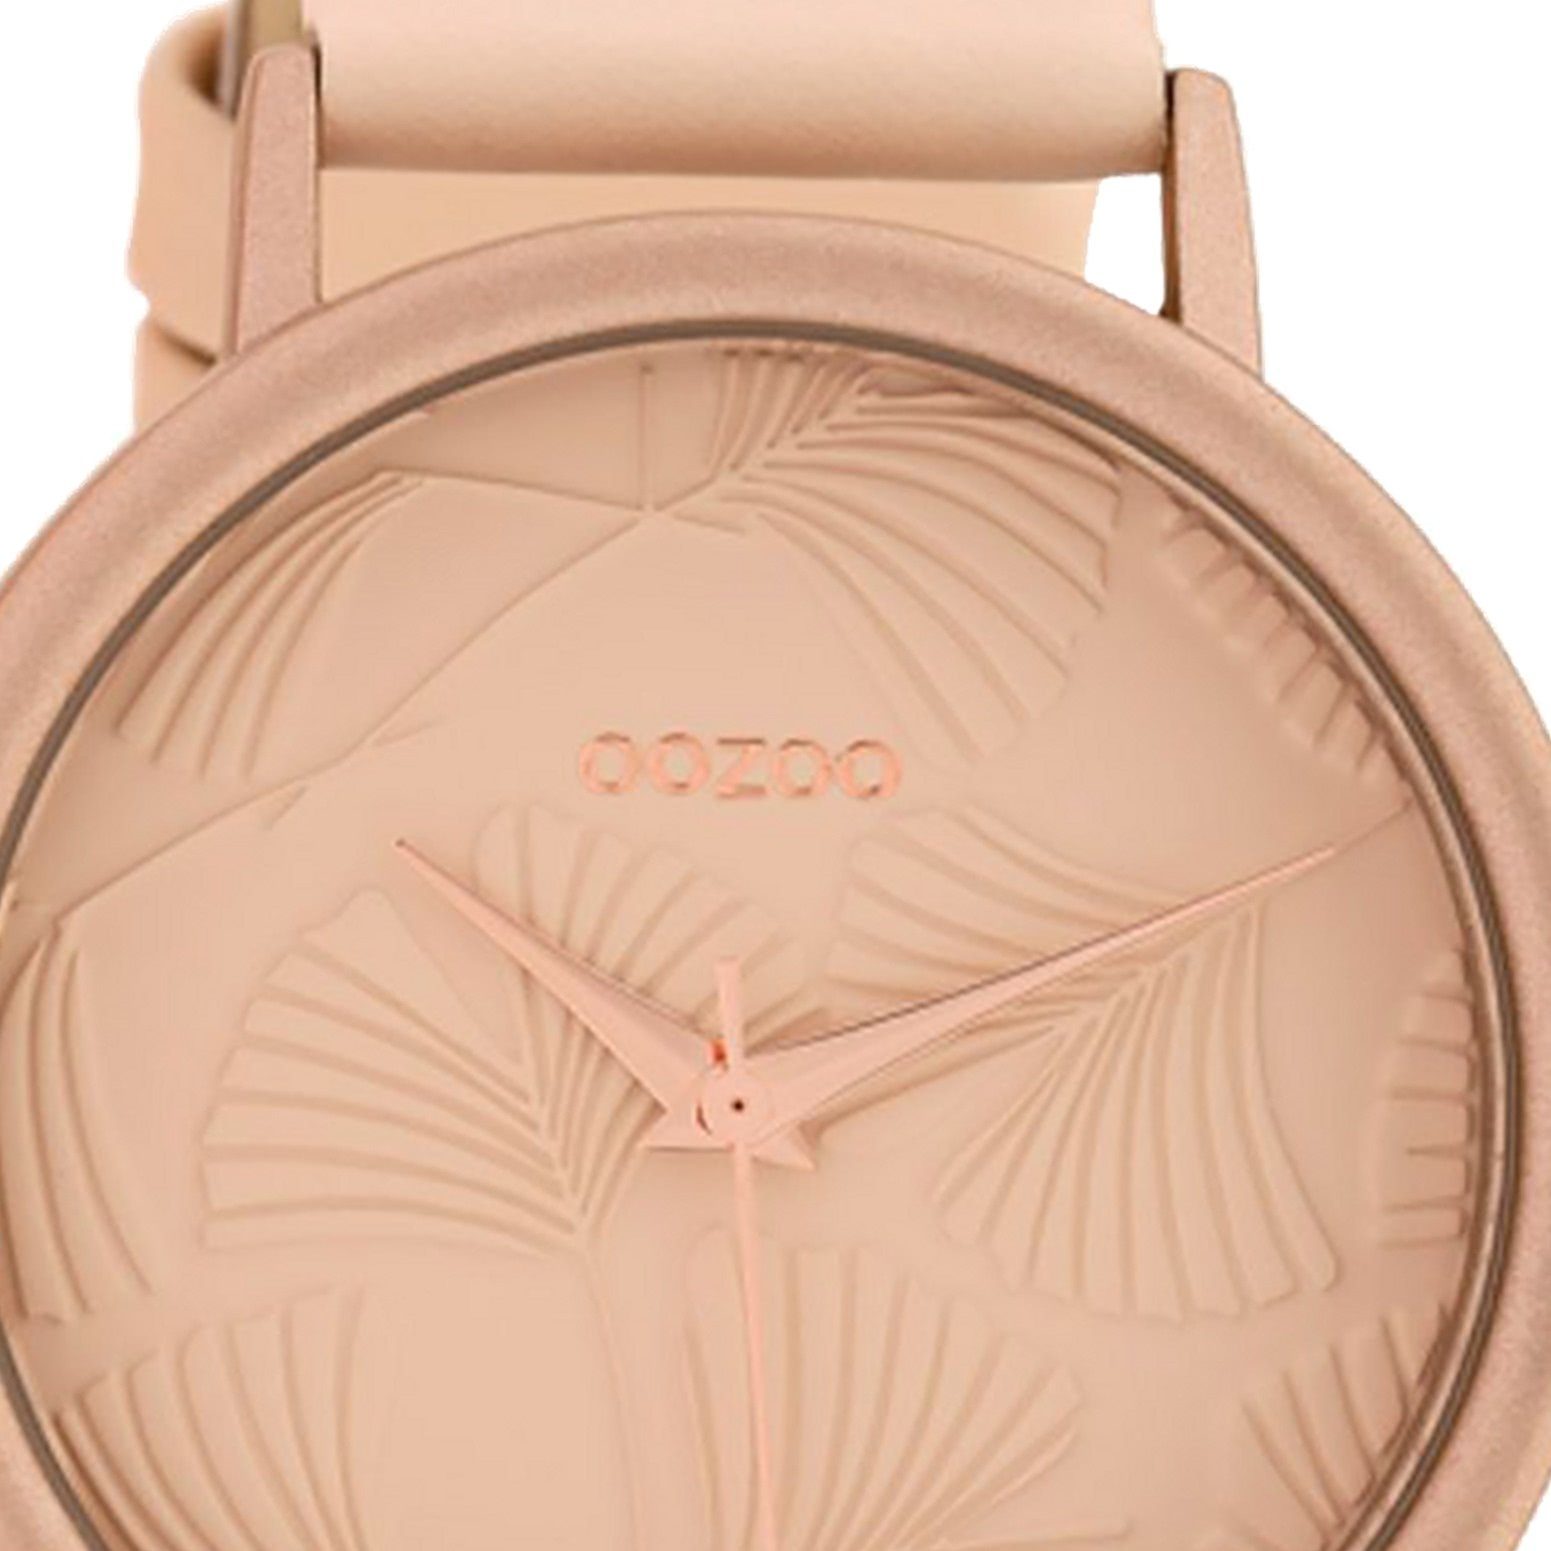 Damen Armbanduhr groß (ca. Lederarmband rosa, Quarzuhr OOZOO rosa, rund, Oozoo Damenuhr 42mm), Fashion